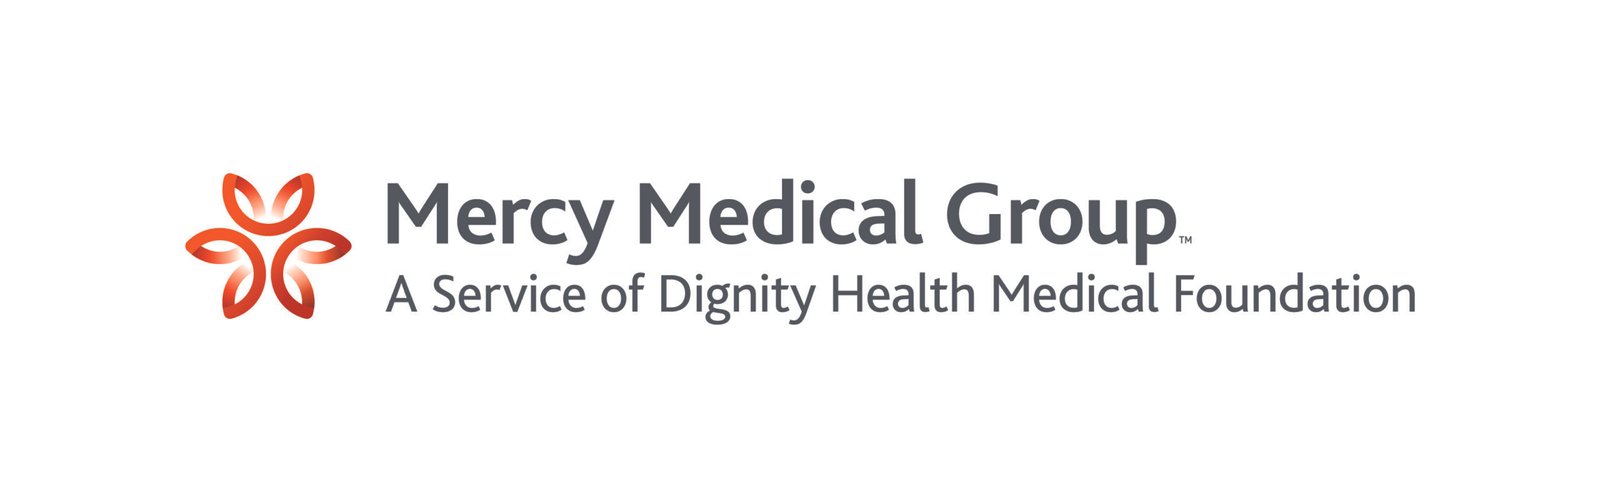 Mercy Medical Group Logo